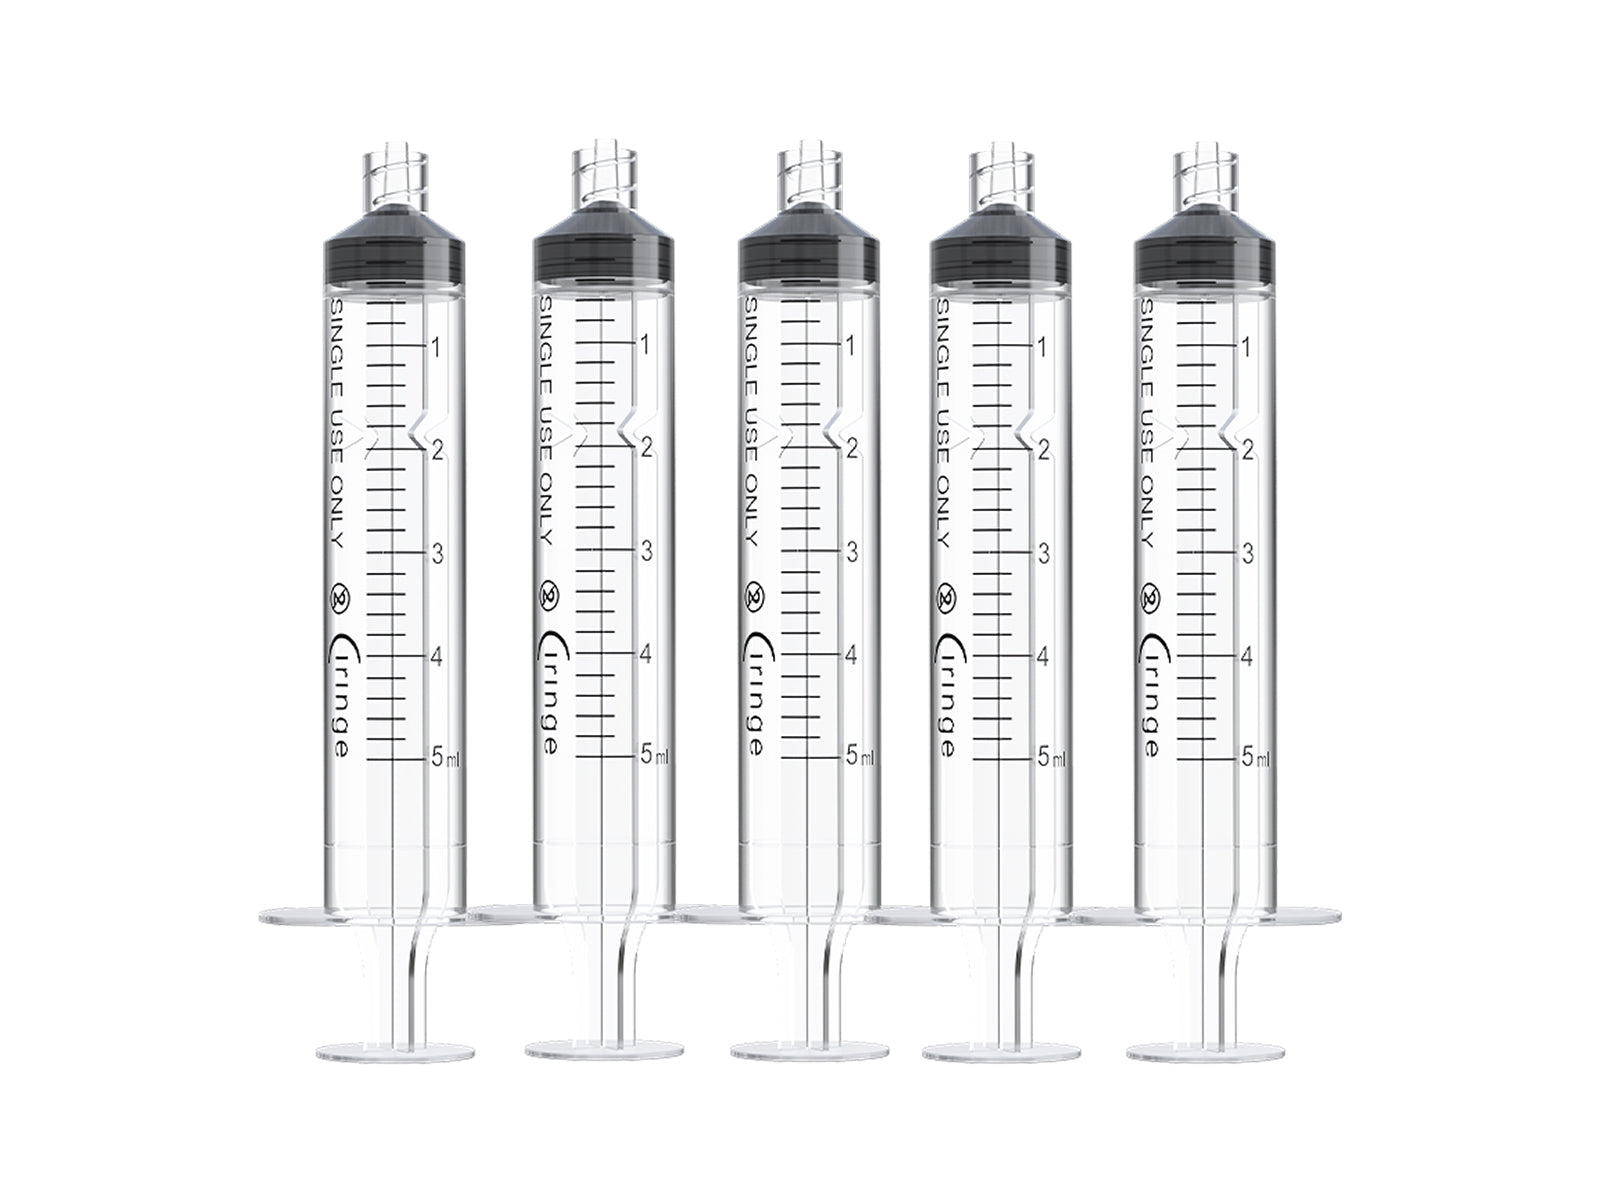 Ciringe Disposable Syringes - Pack of 5